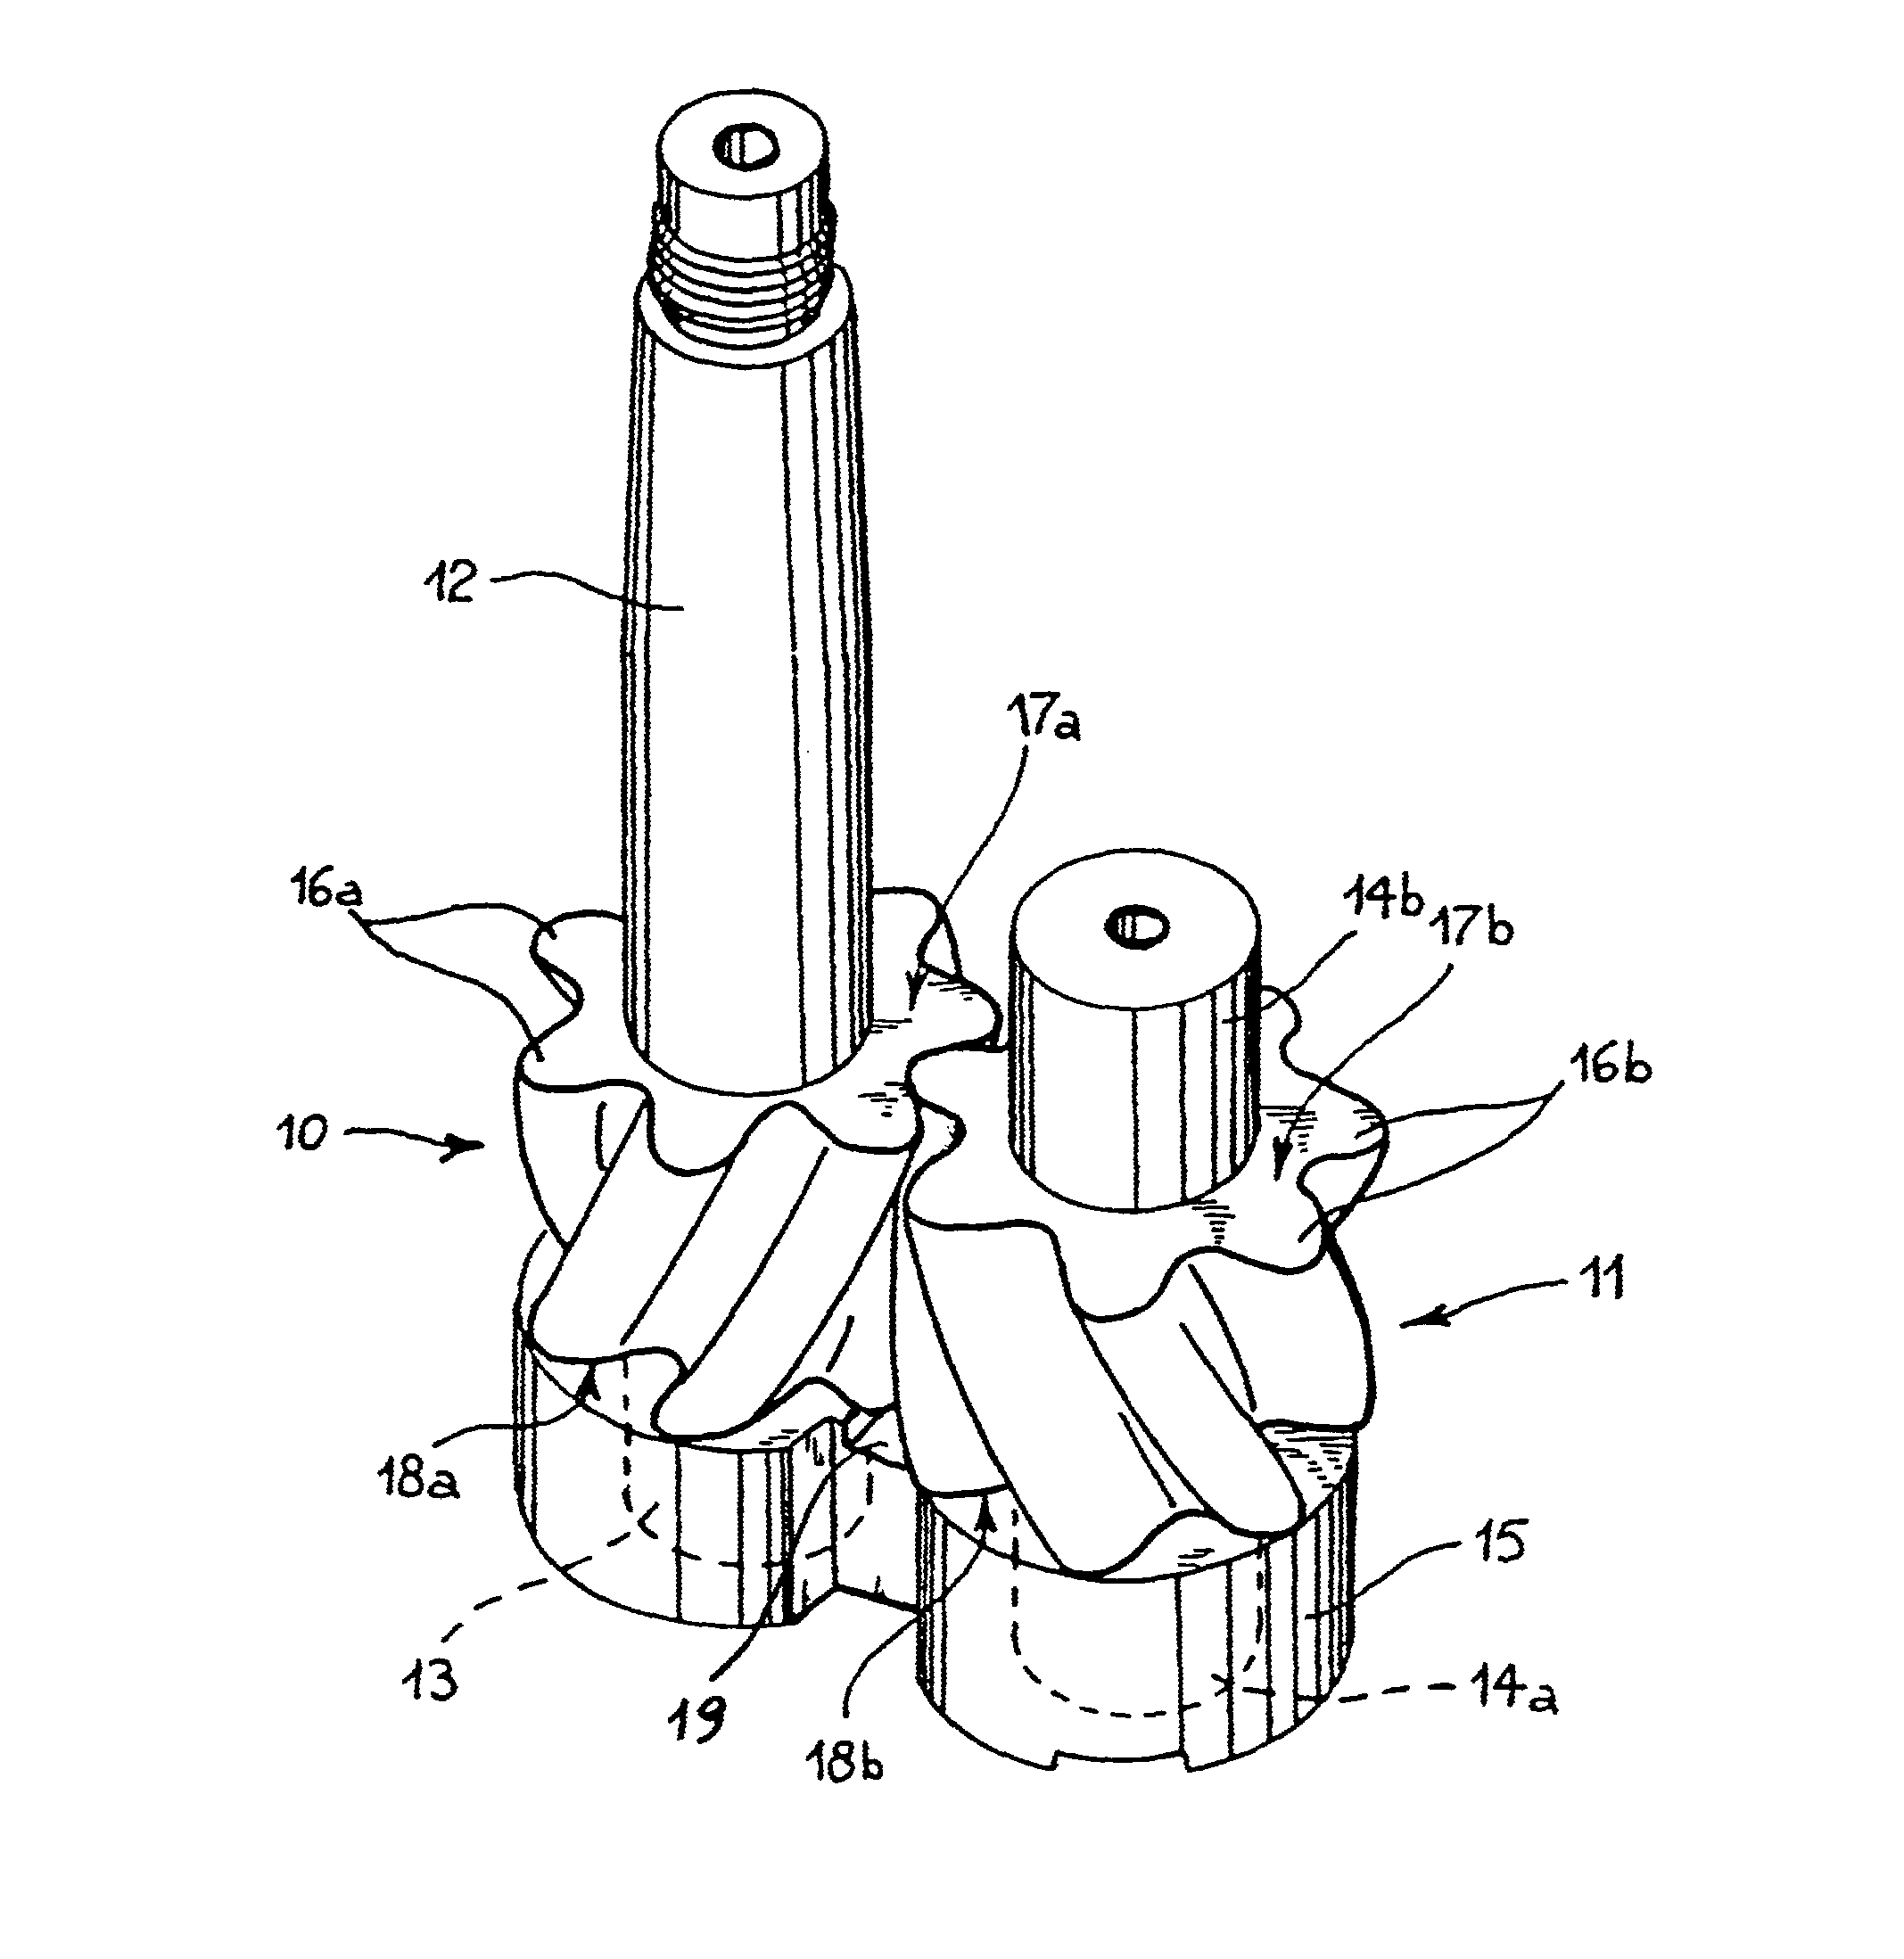 Geared hydraulic apparatus